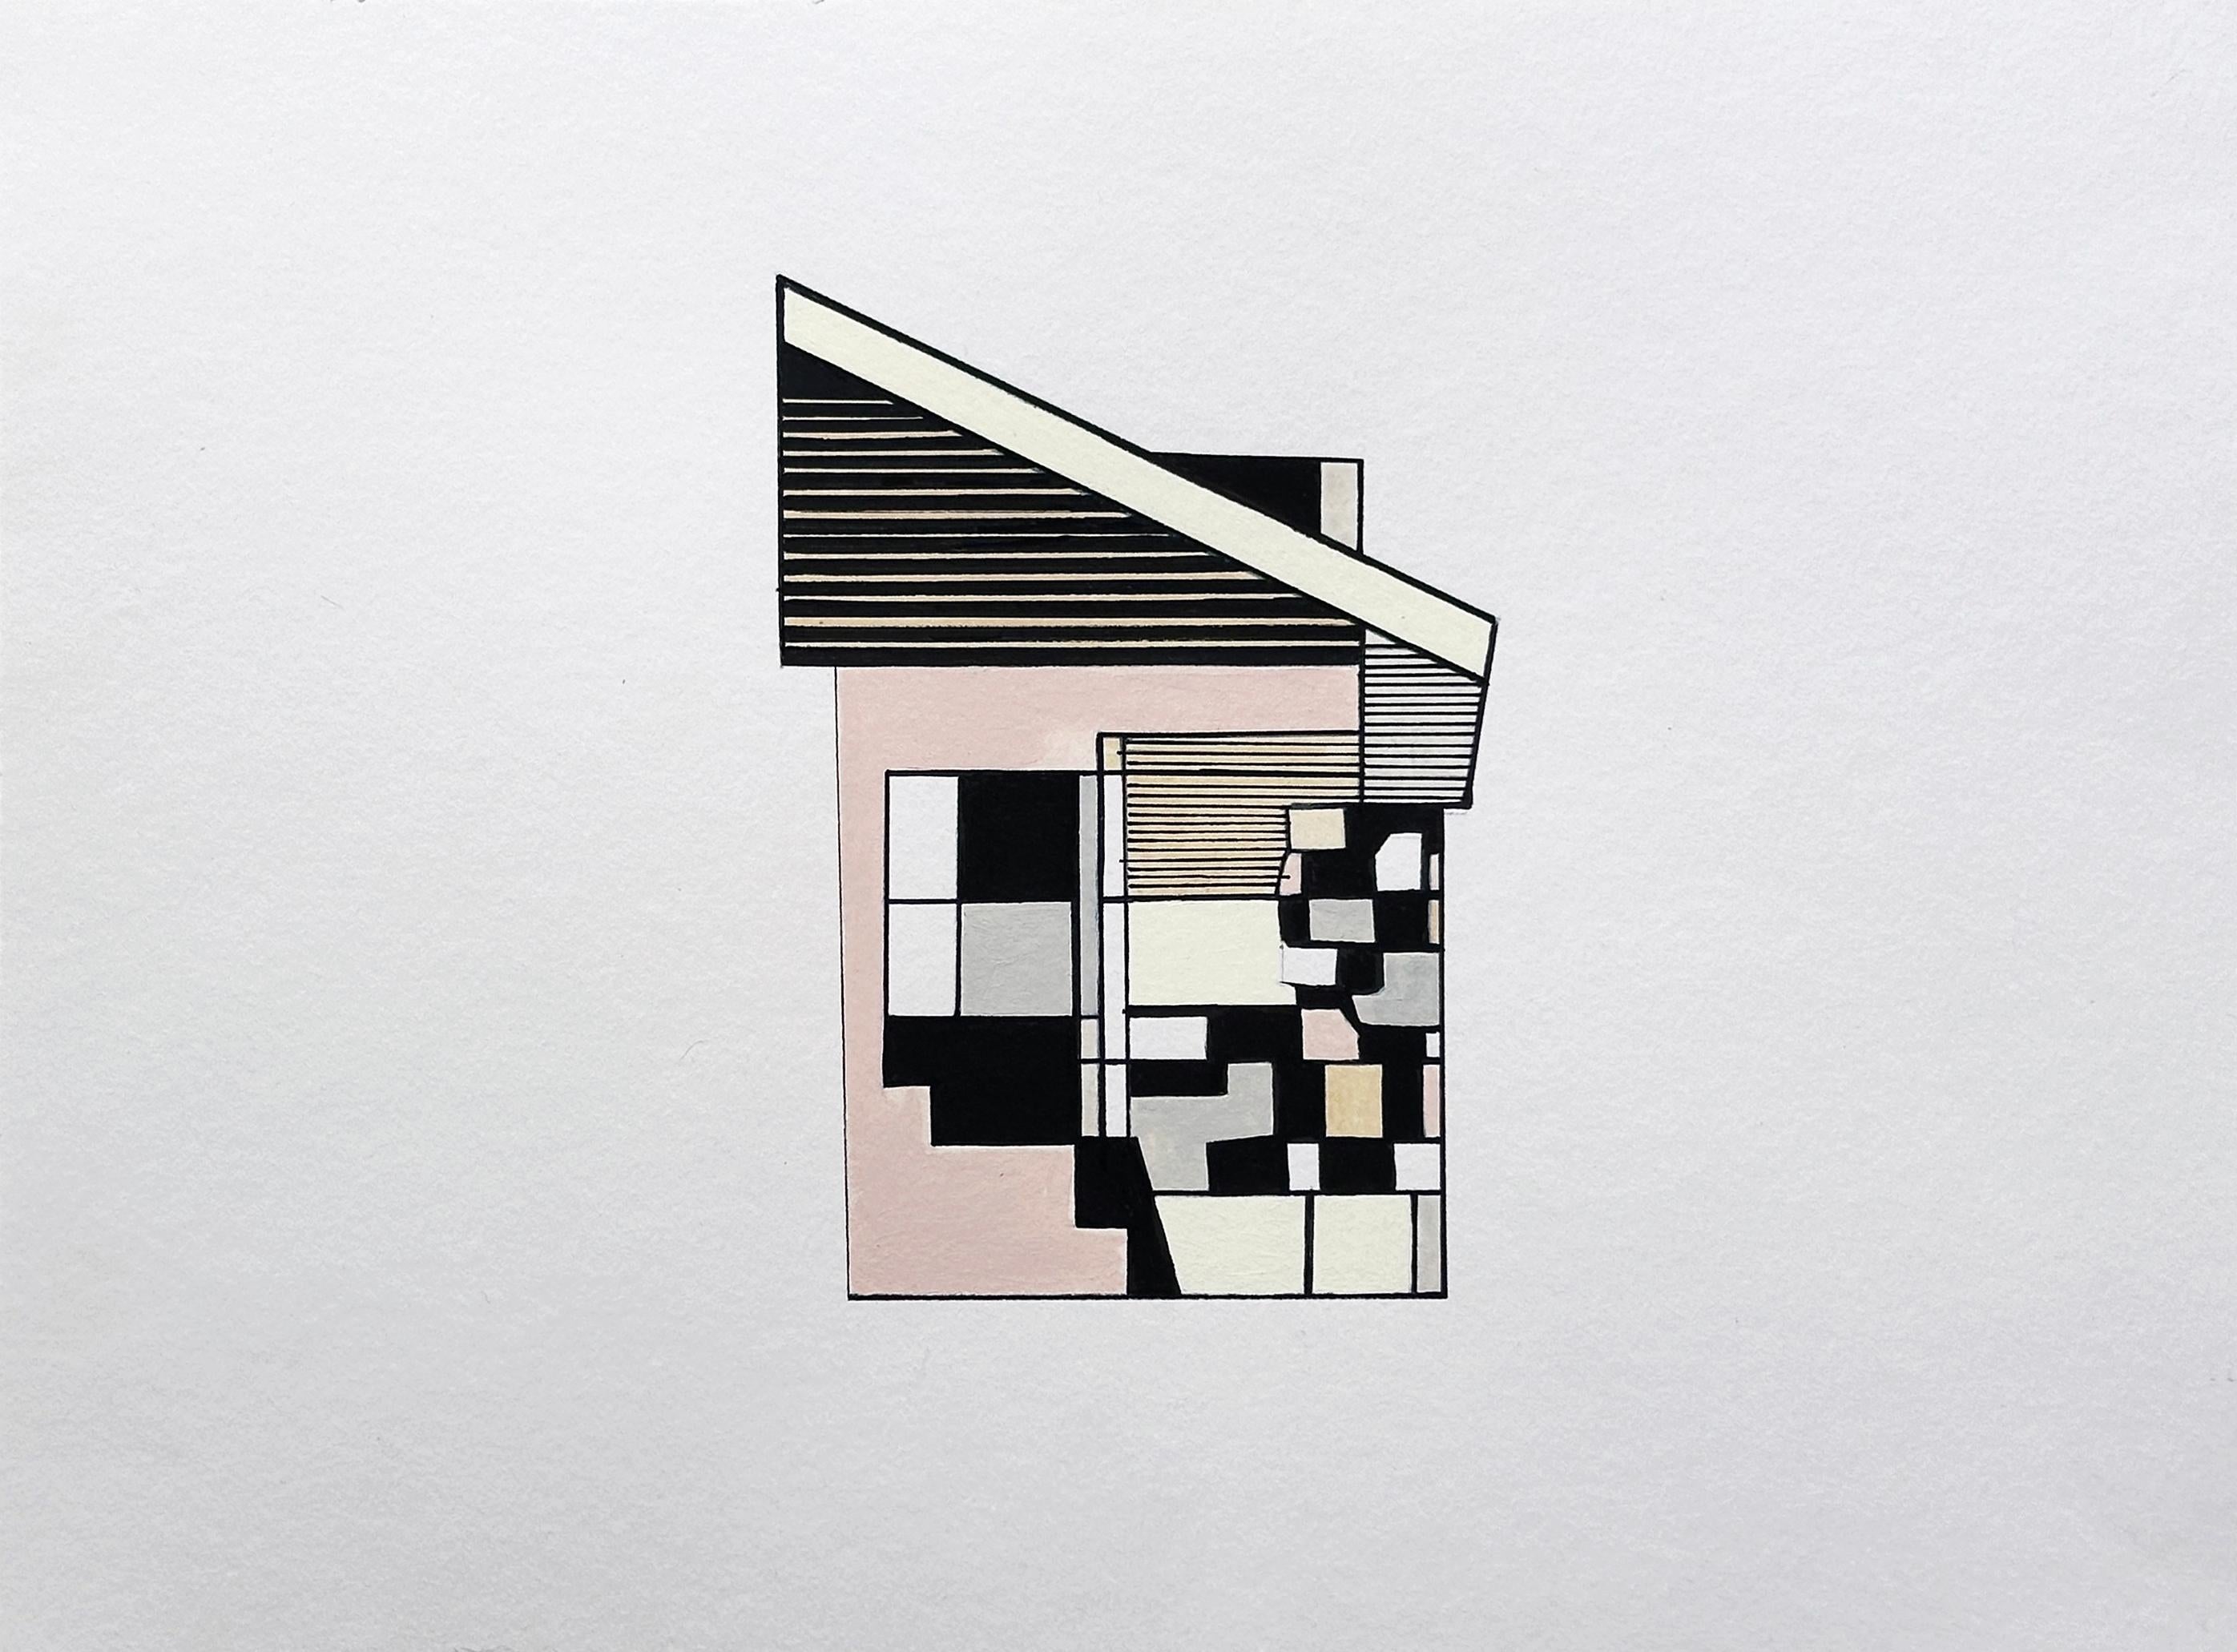 Amanda Andersen Abstract Drawing - "Edifice VI" contemporary drawing, abstract geometric, natural architecture